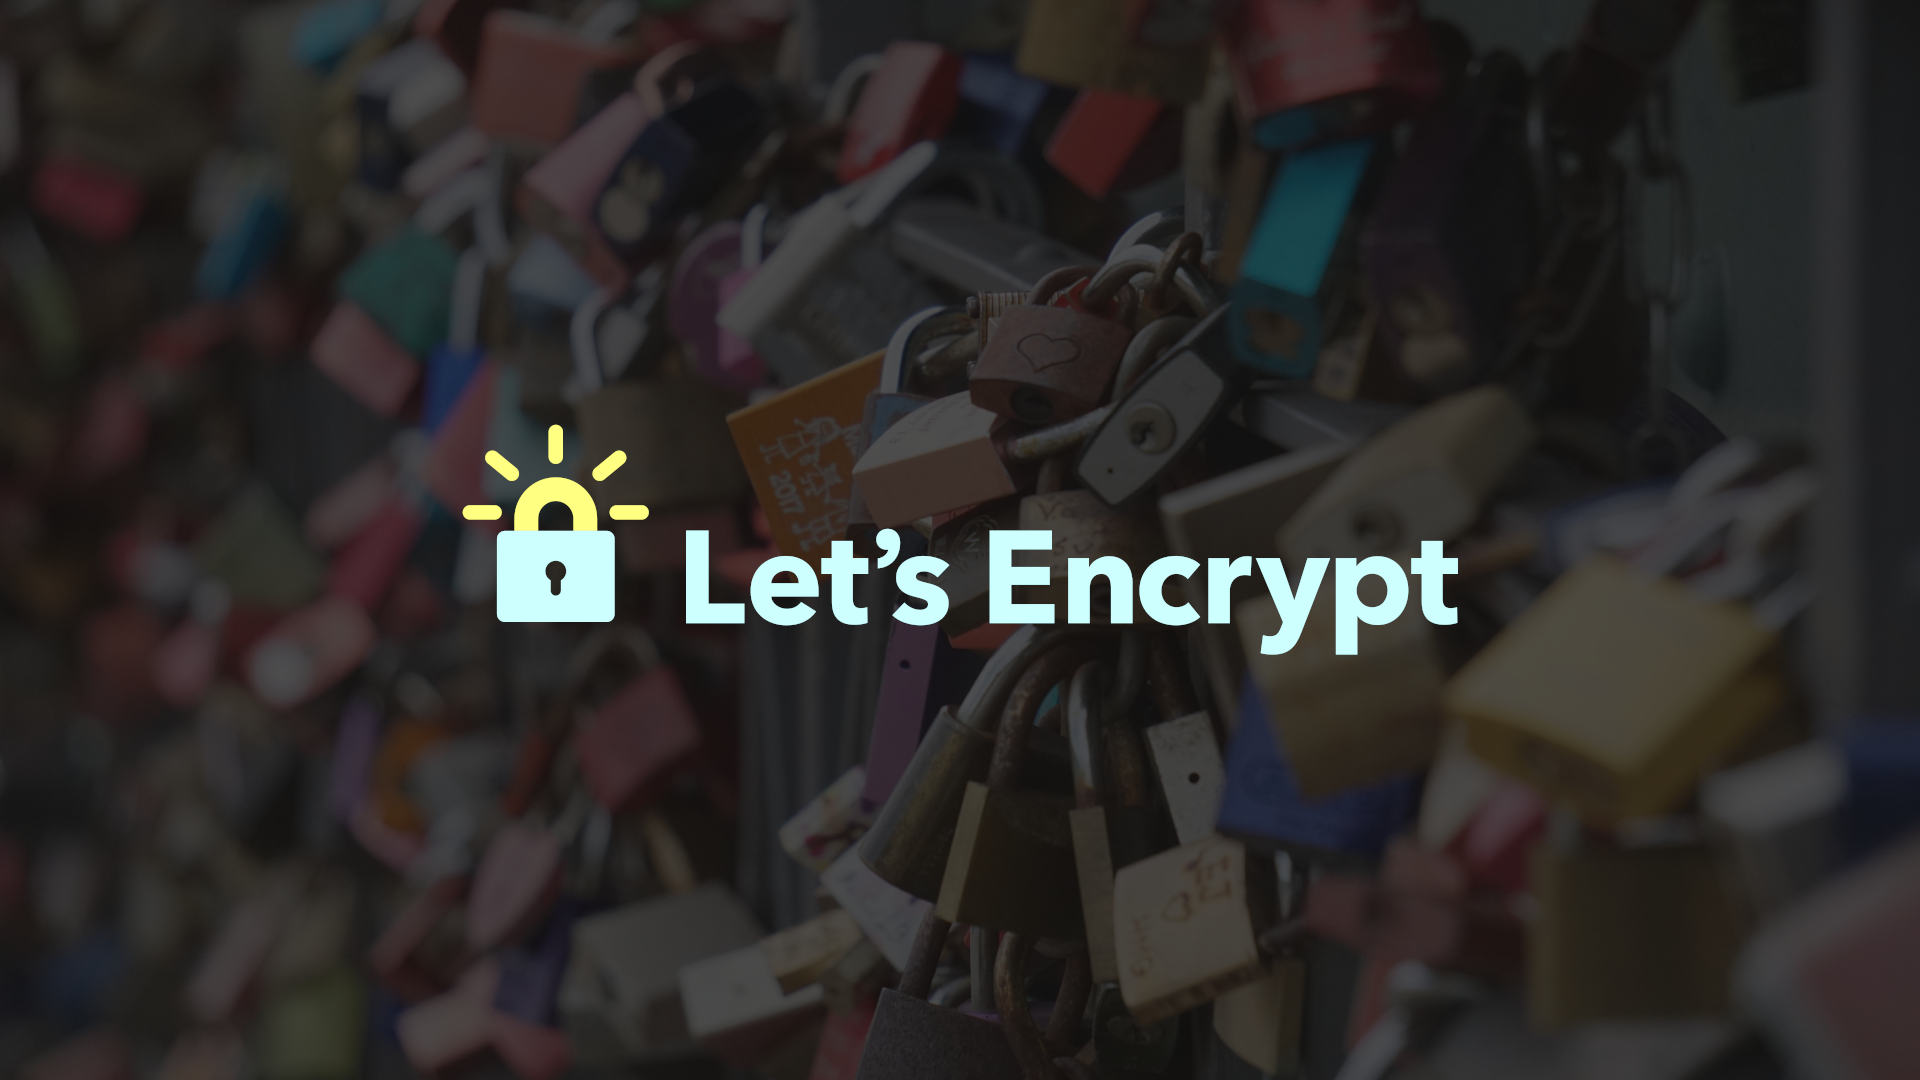 lets encrypt locks